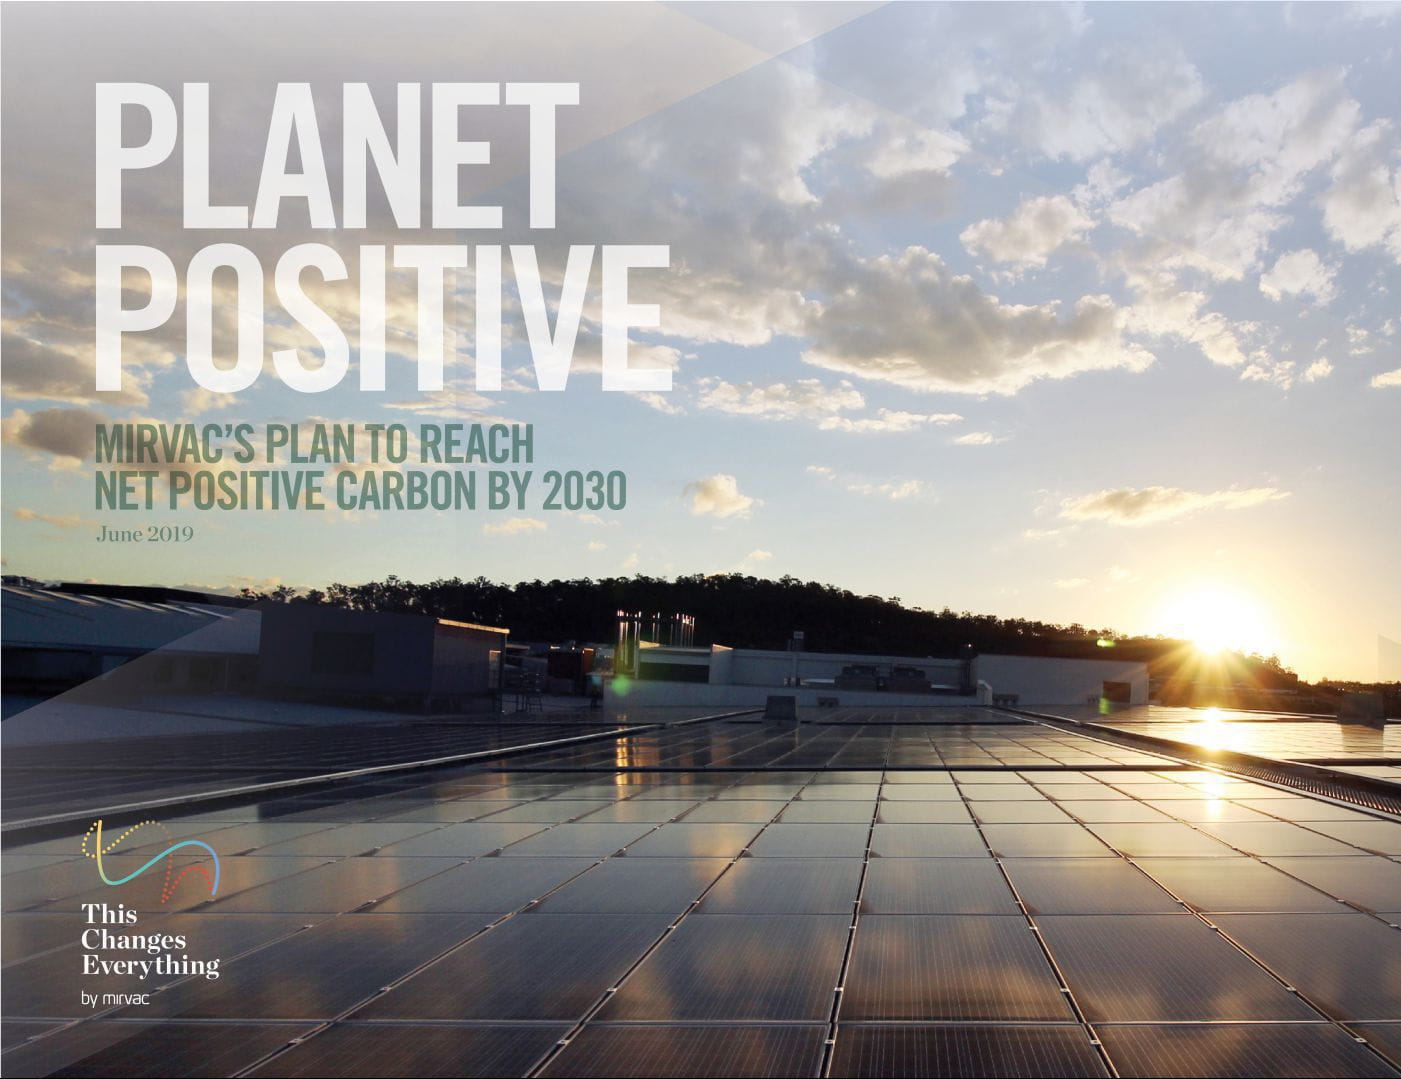 Mirvac Planet Positive solar panels